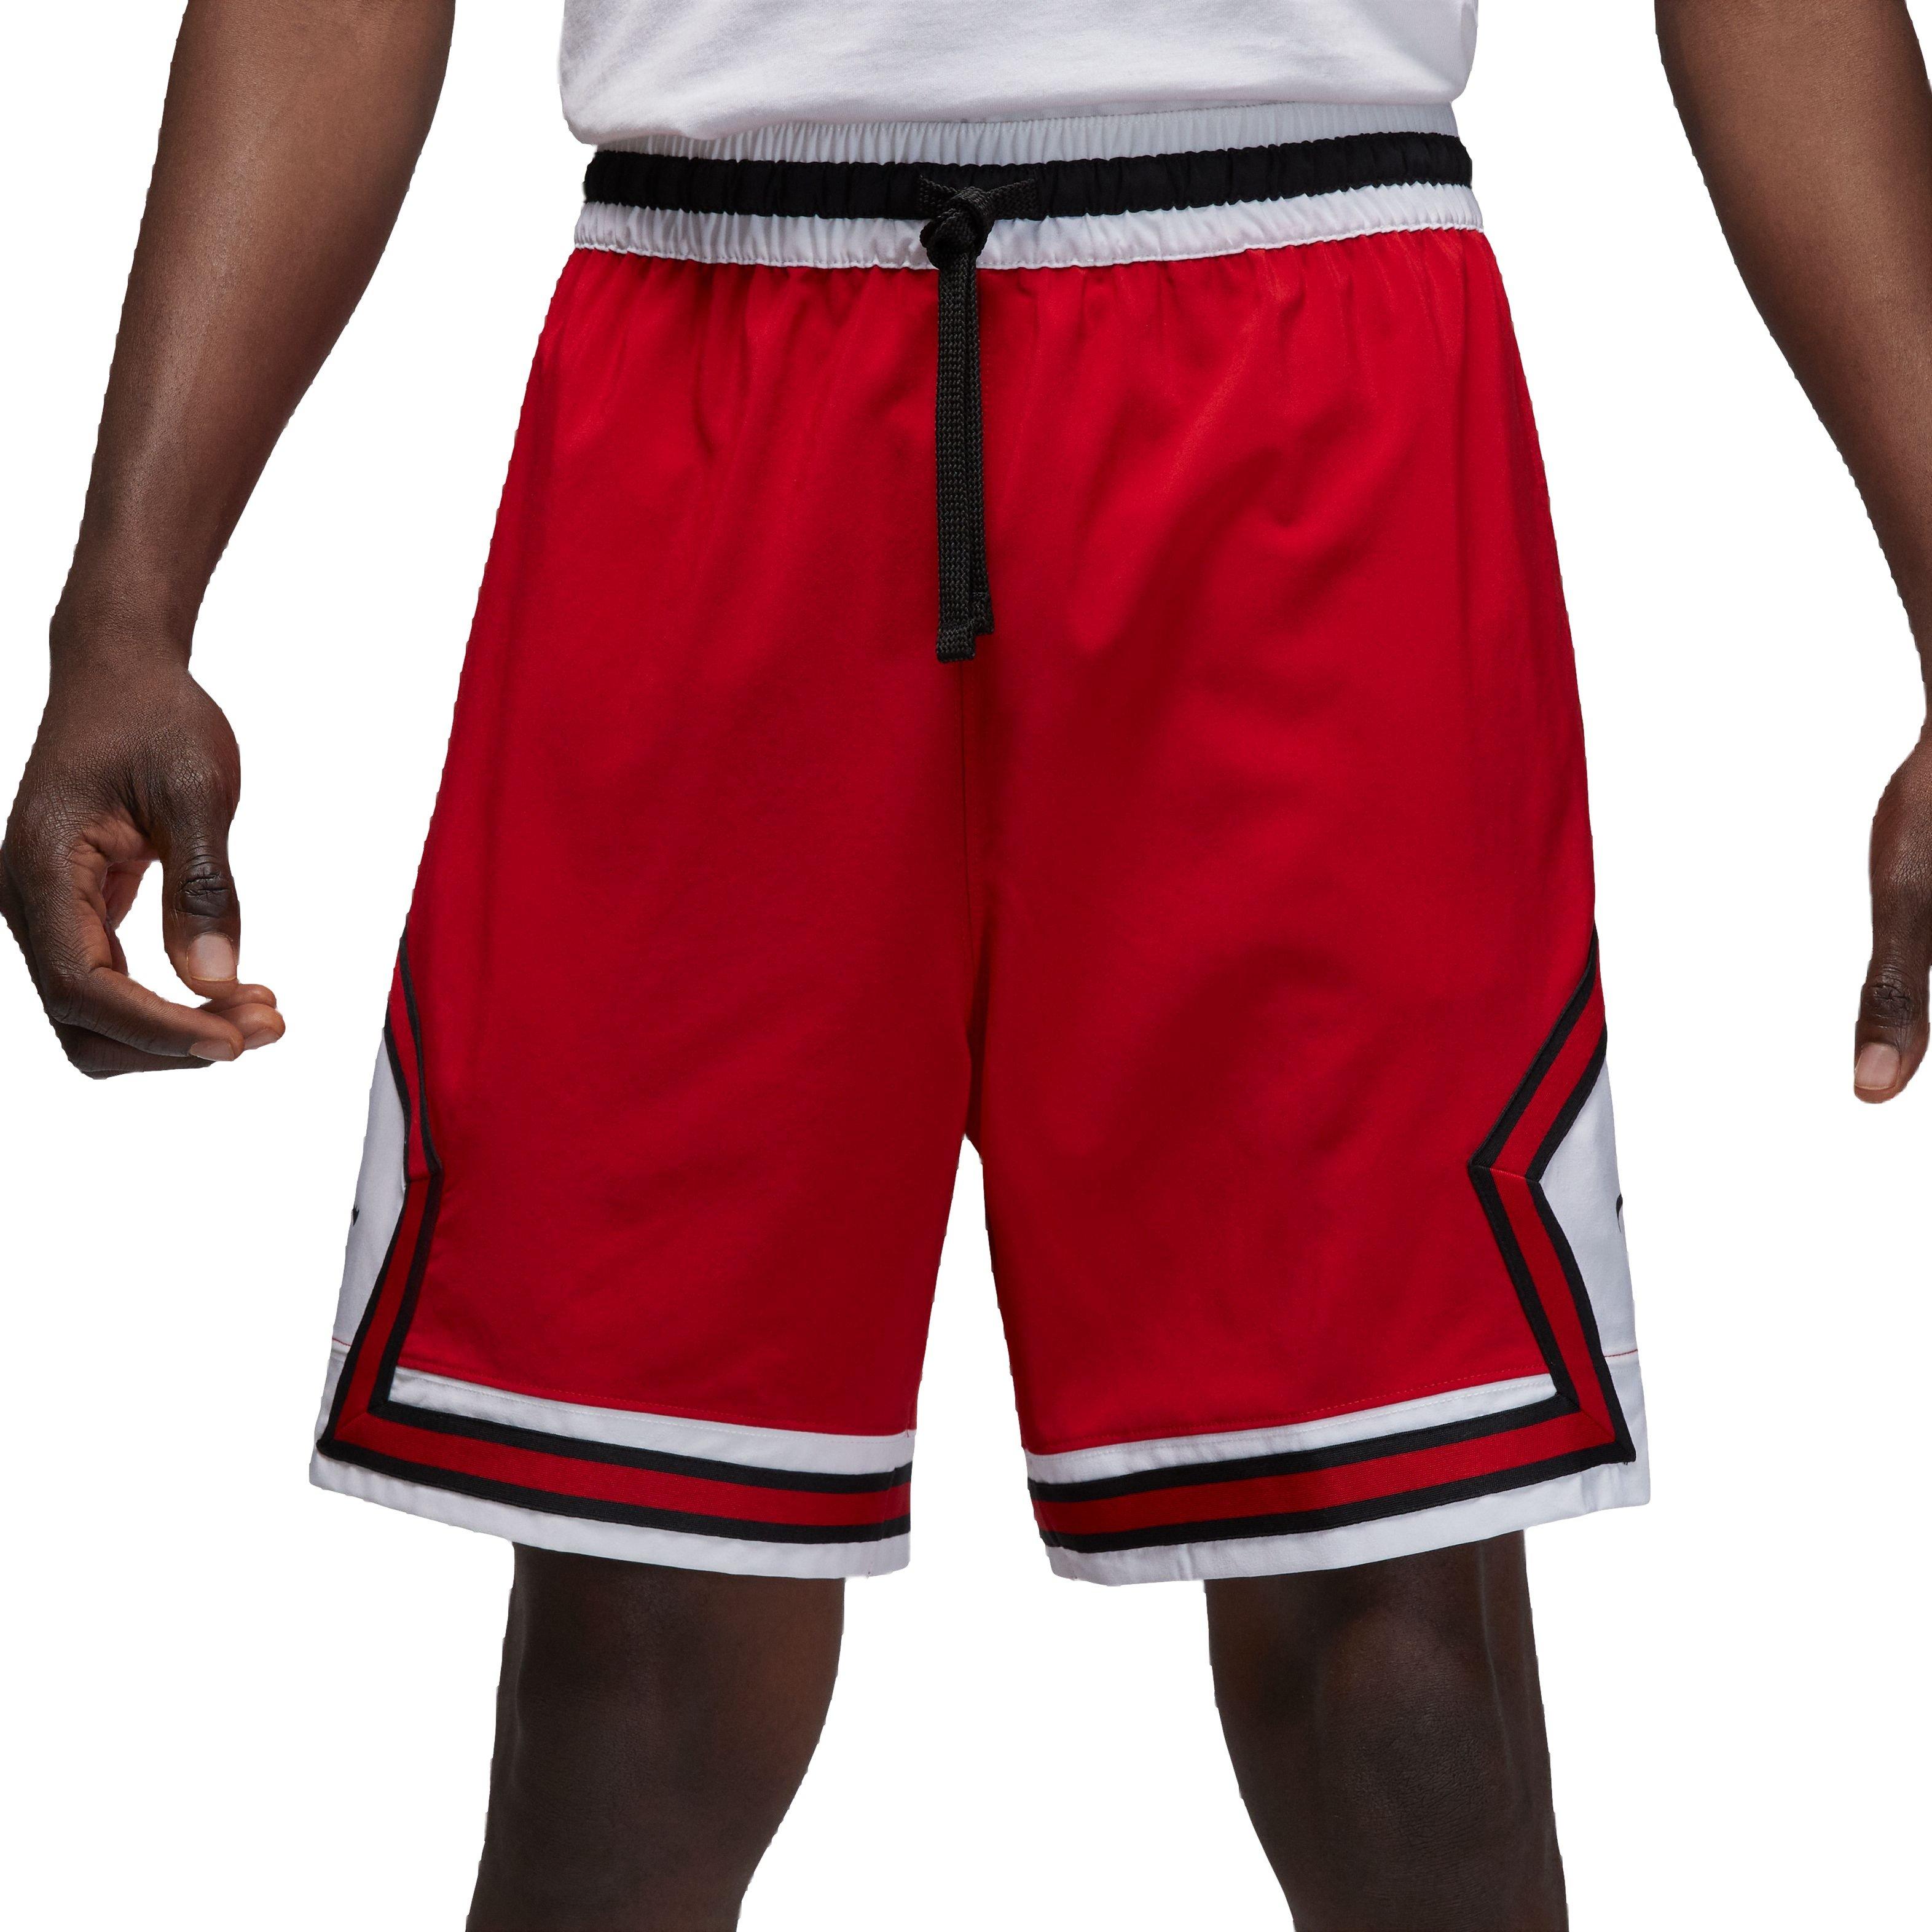 Adidas NBA Chicago Bulls Basketball Shorts Black Red Stripes Sz M